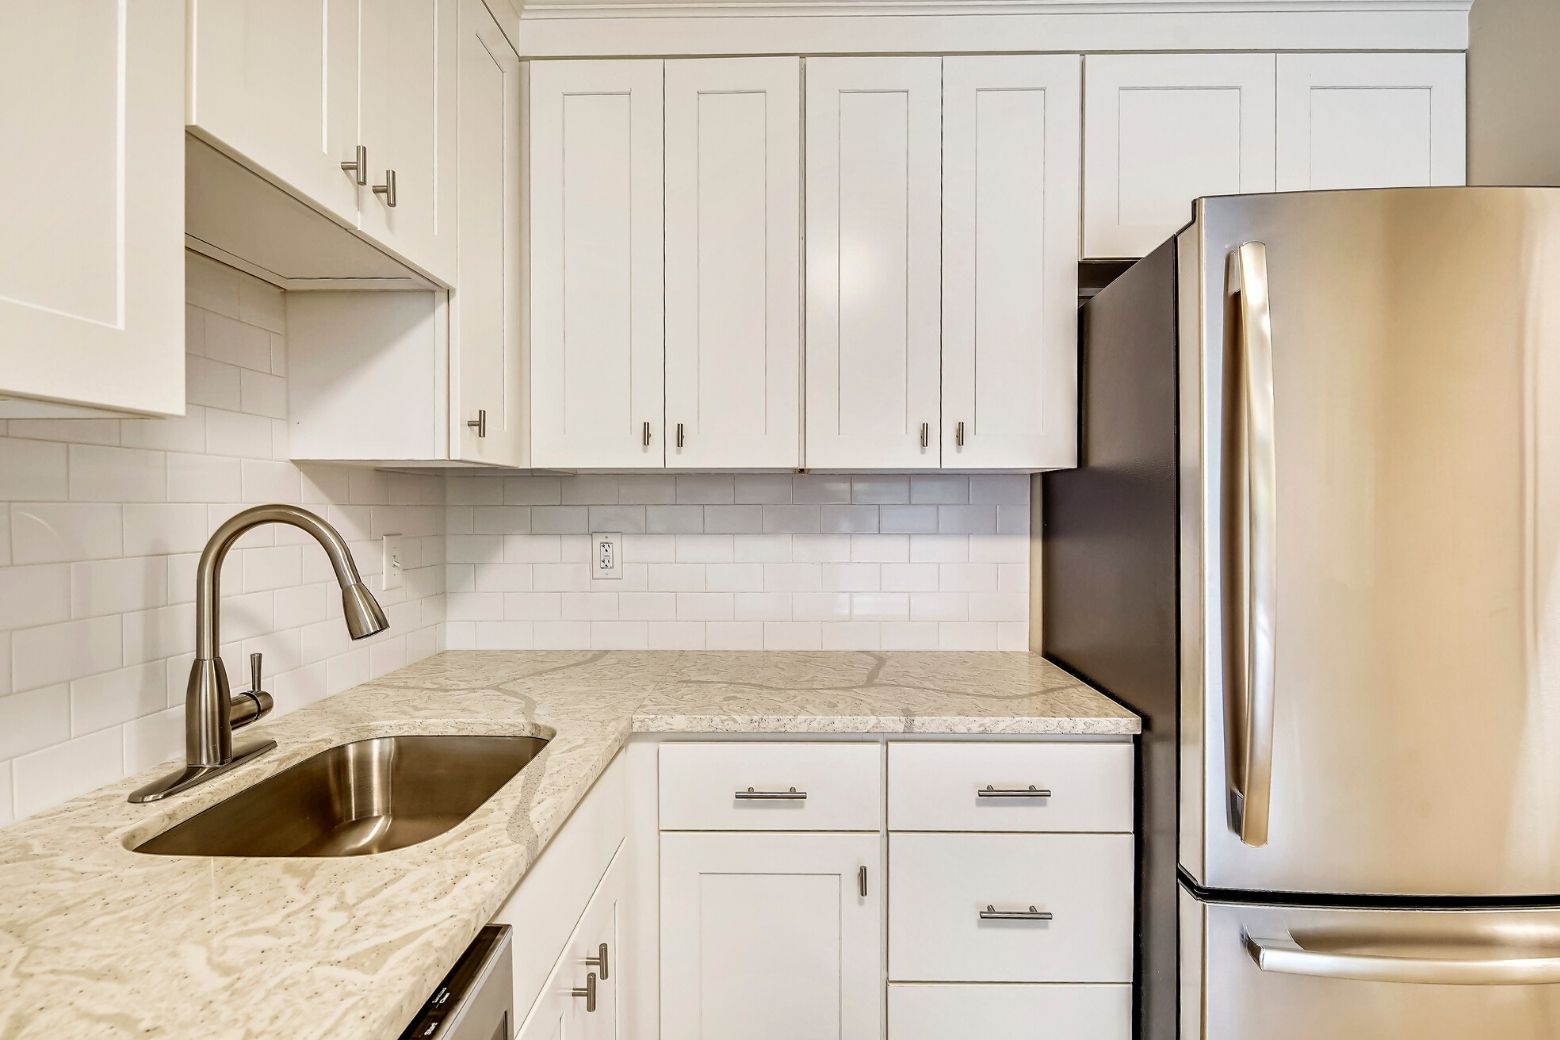 7 Easy Ways to Update Kitchen Cabinets